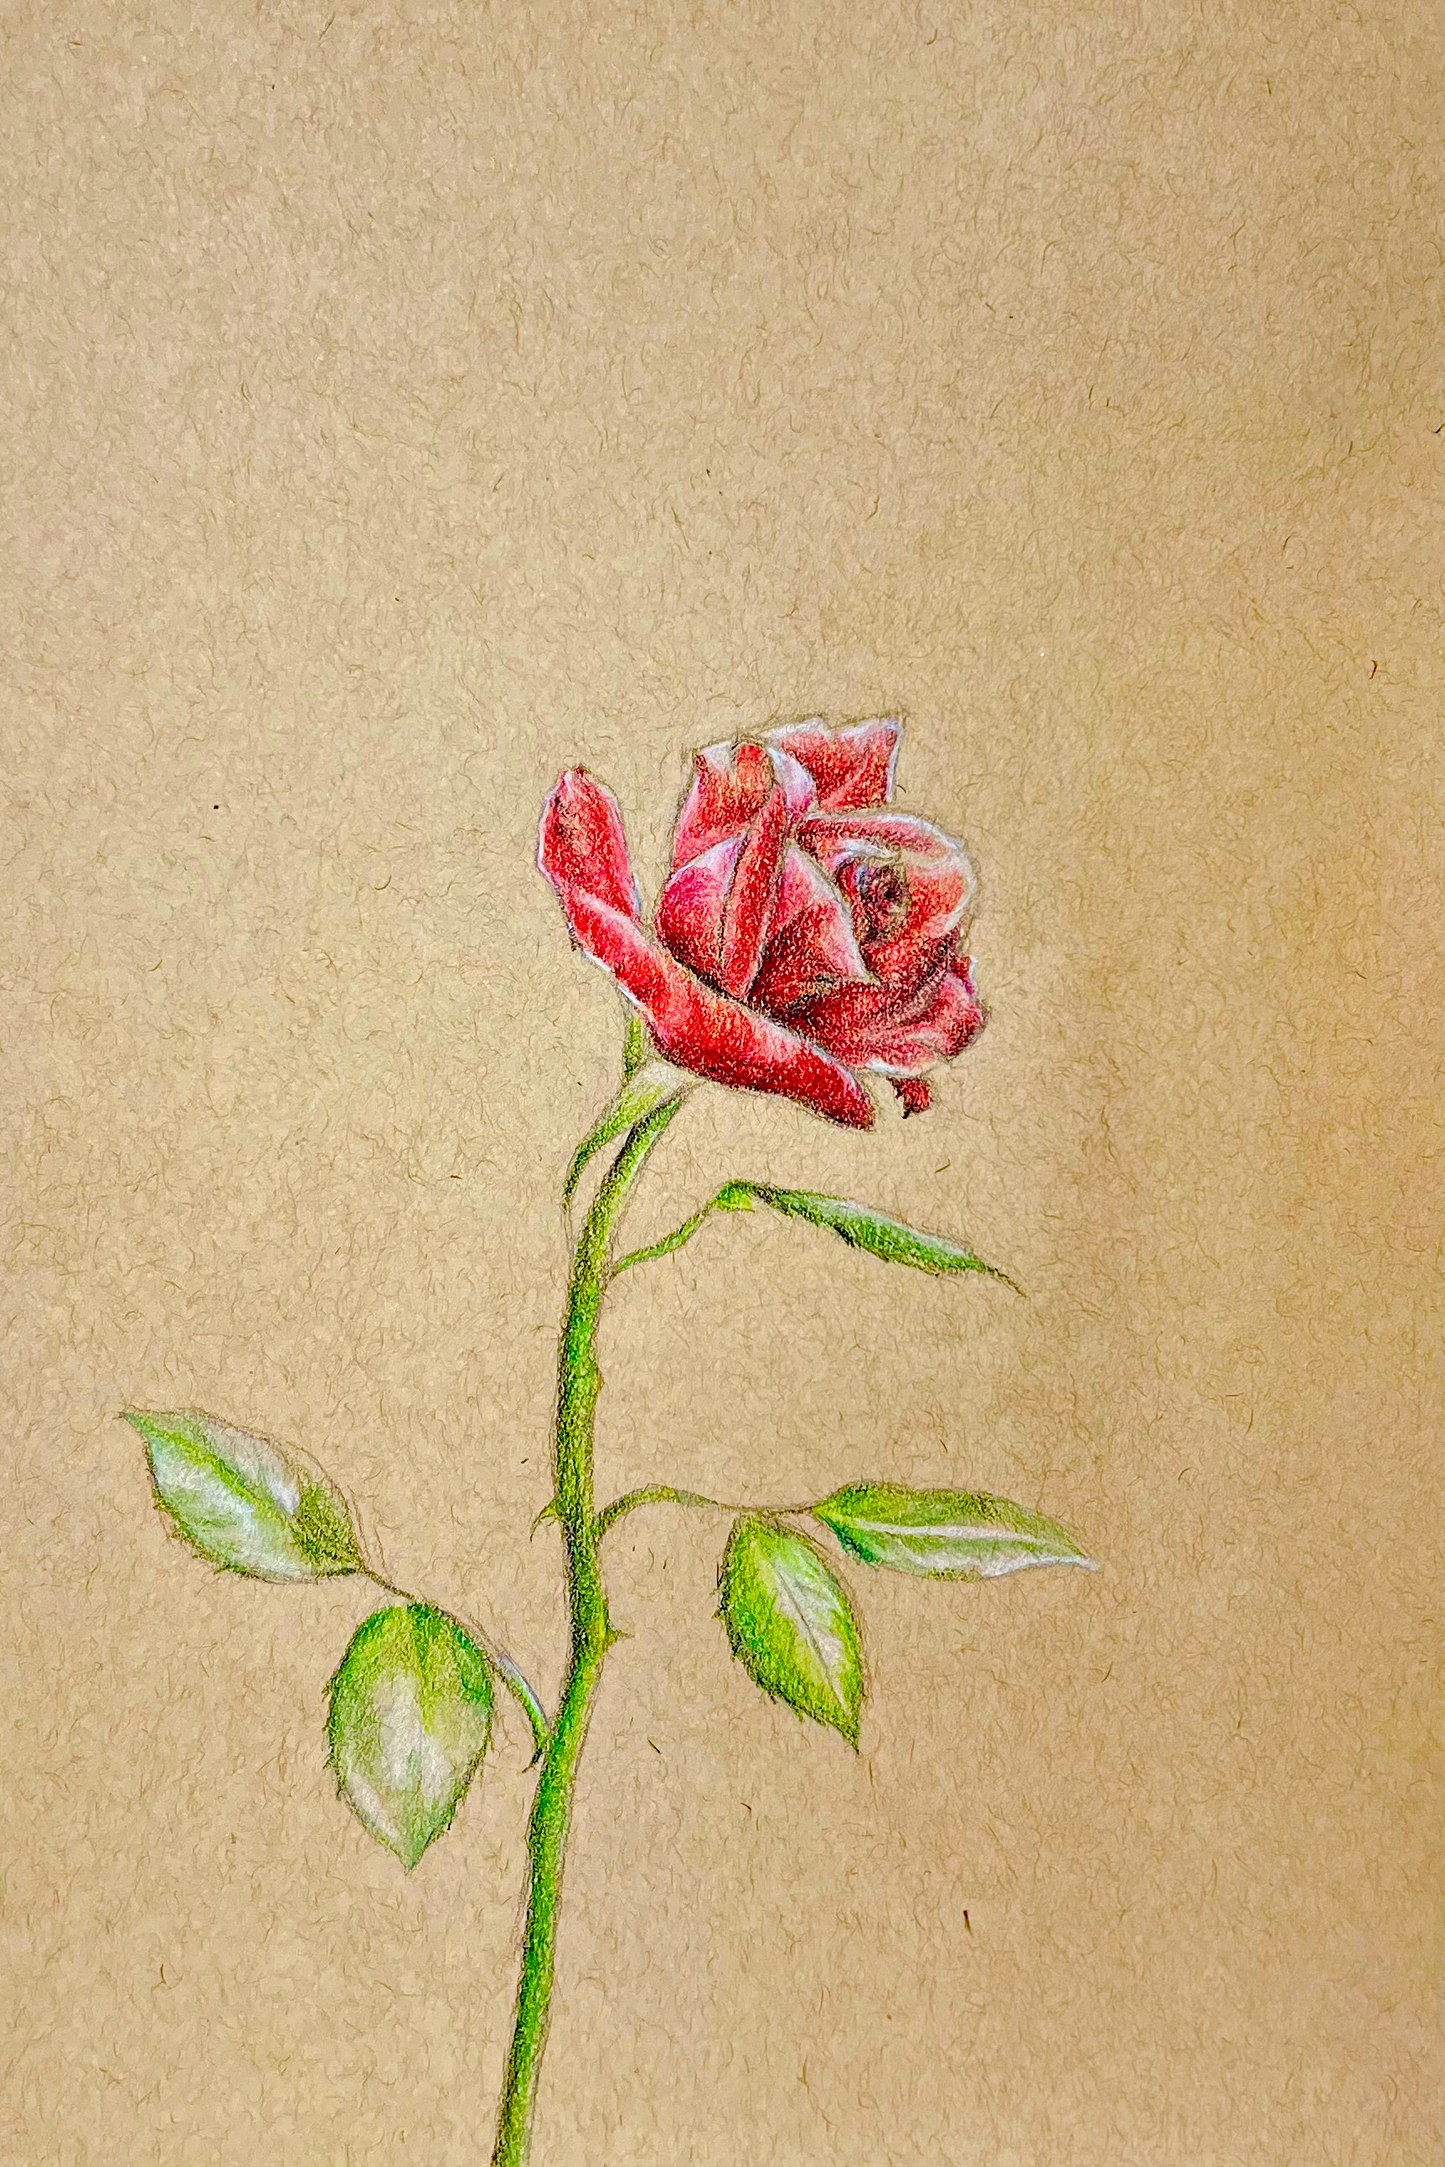 Dainty Rose